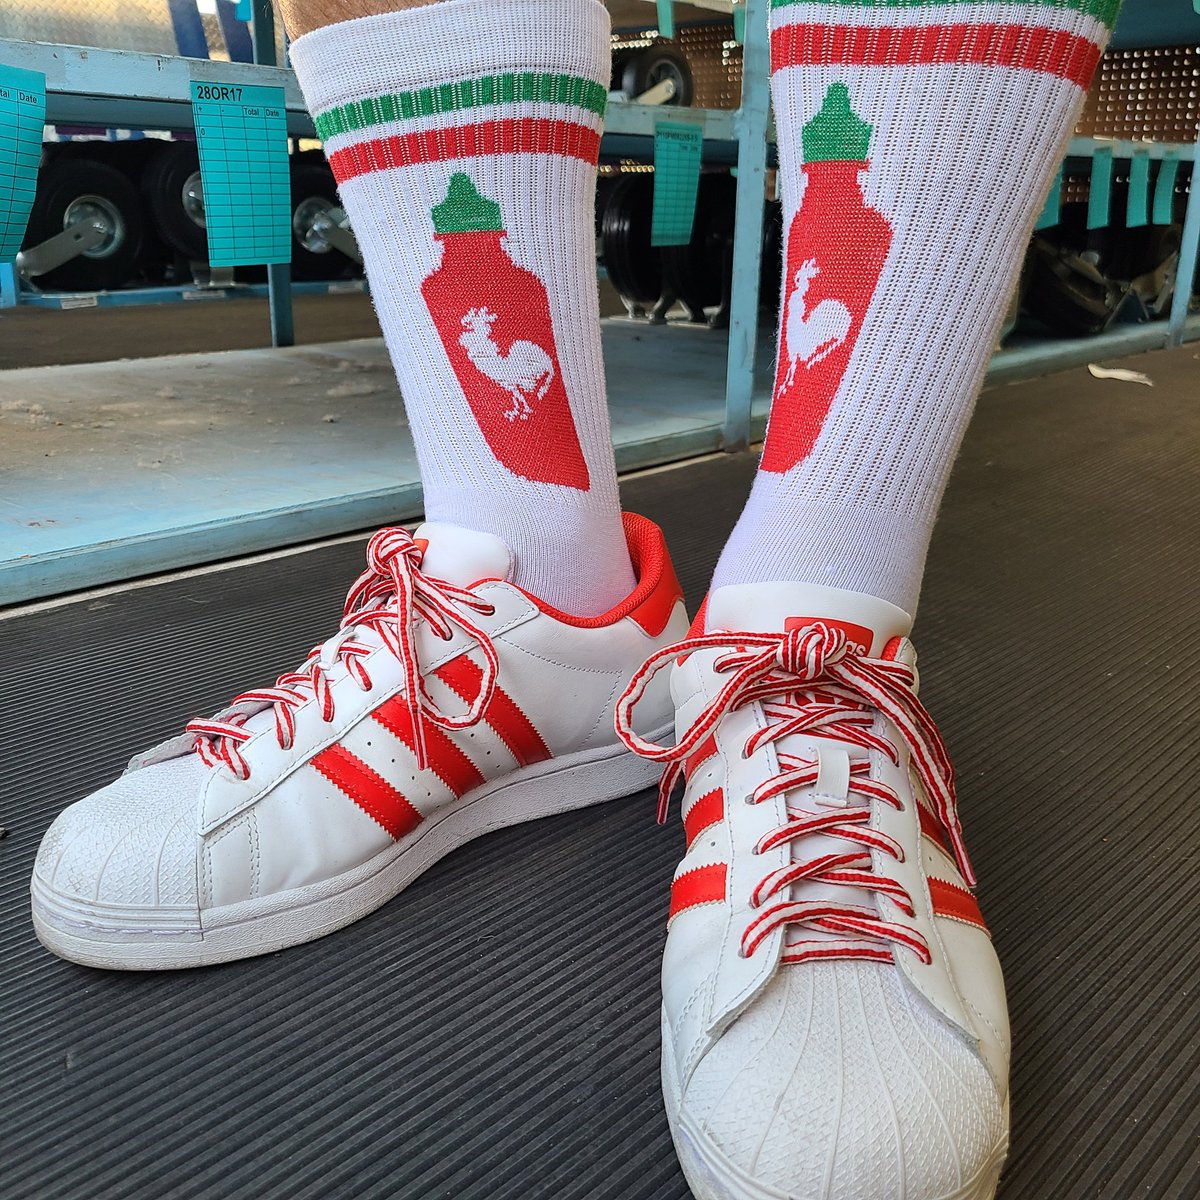 Sriracha Hot Sauce Christmas colors socks & Adidas Superstar #srirachasocks #sriracha #christmassocks @huyfongfoods #stockingstuffers #treelighting #popculture #ootd #sotd #adidas #classic #adidassuperstar #adidasclassic @adidas #yesadidas #threestripes #threestripelife